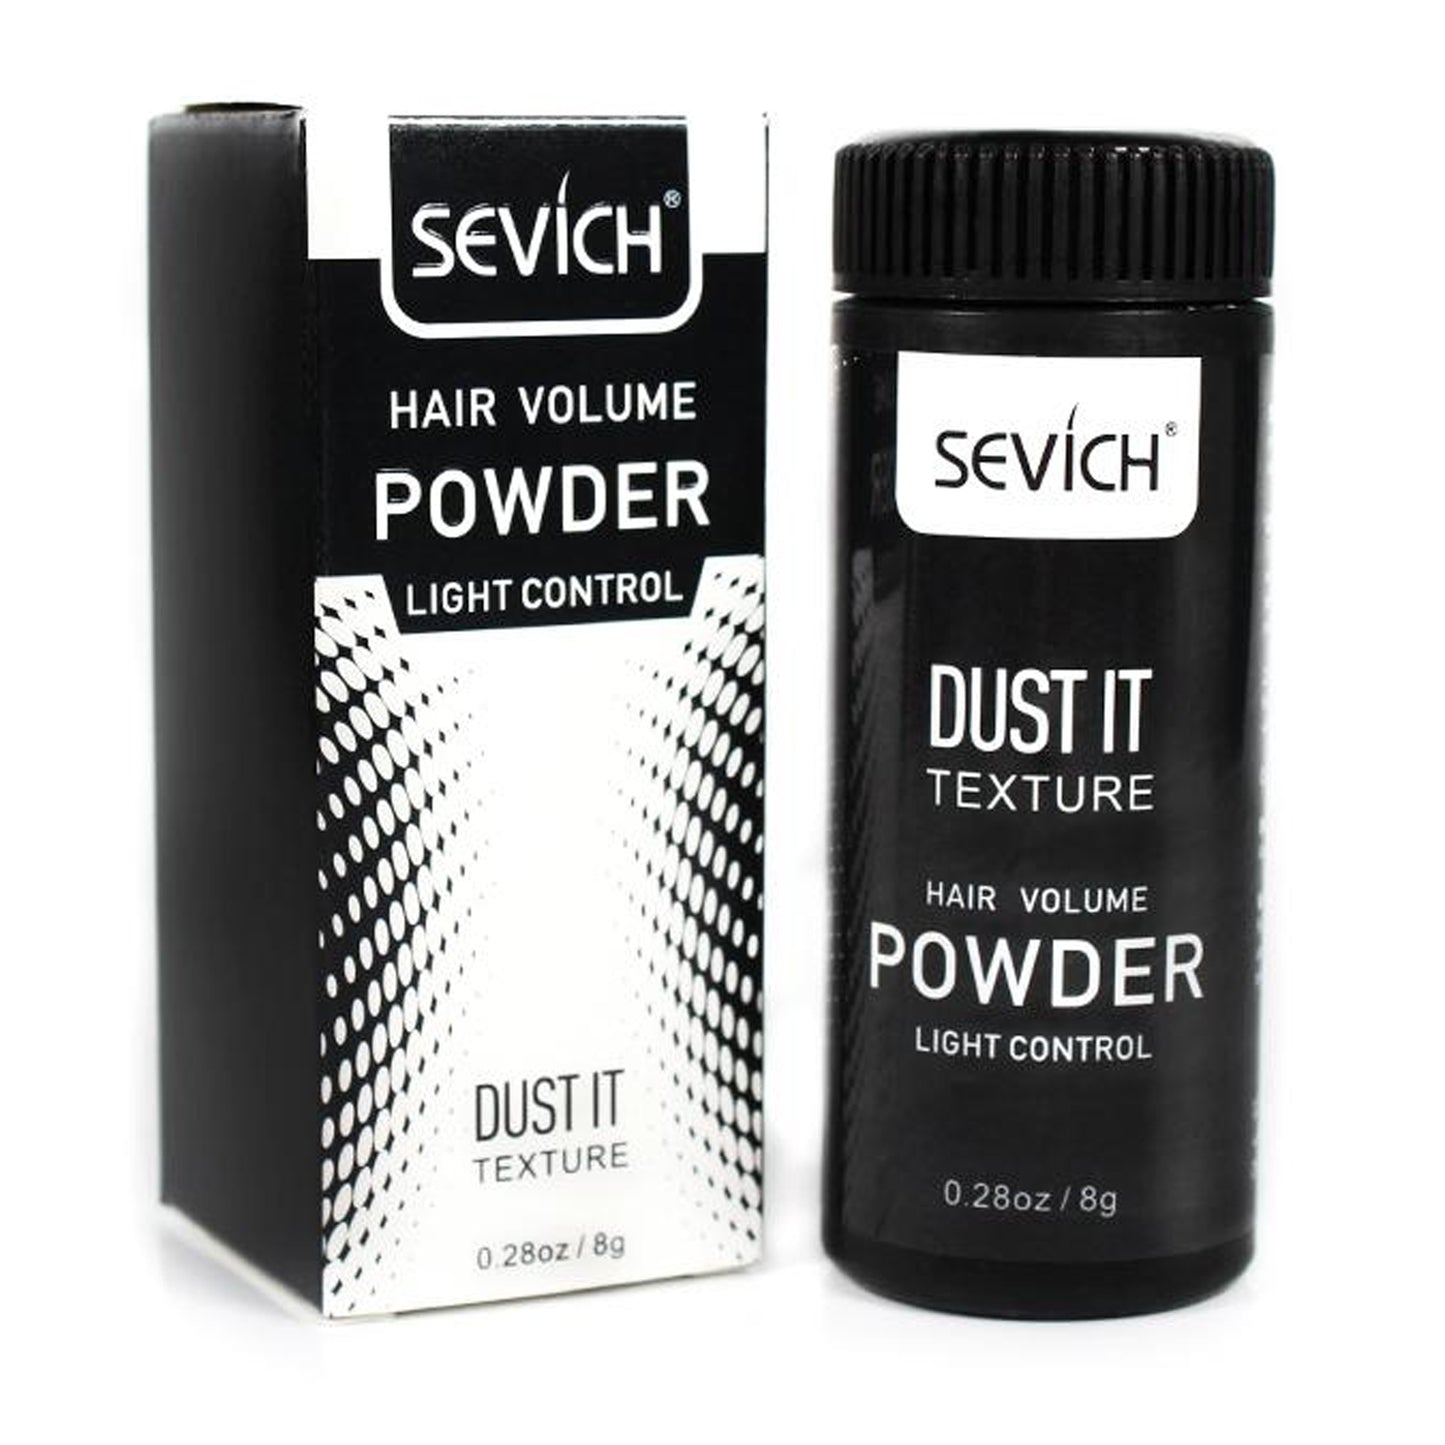 SEVICH - DUST IT TEXTURE HAIR VOLUME POWDER - 8G